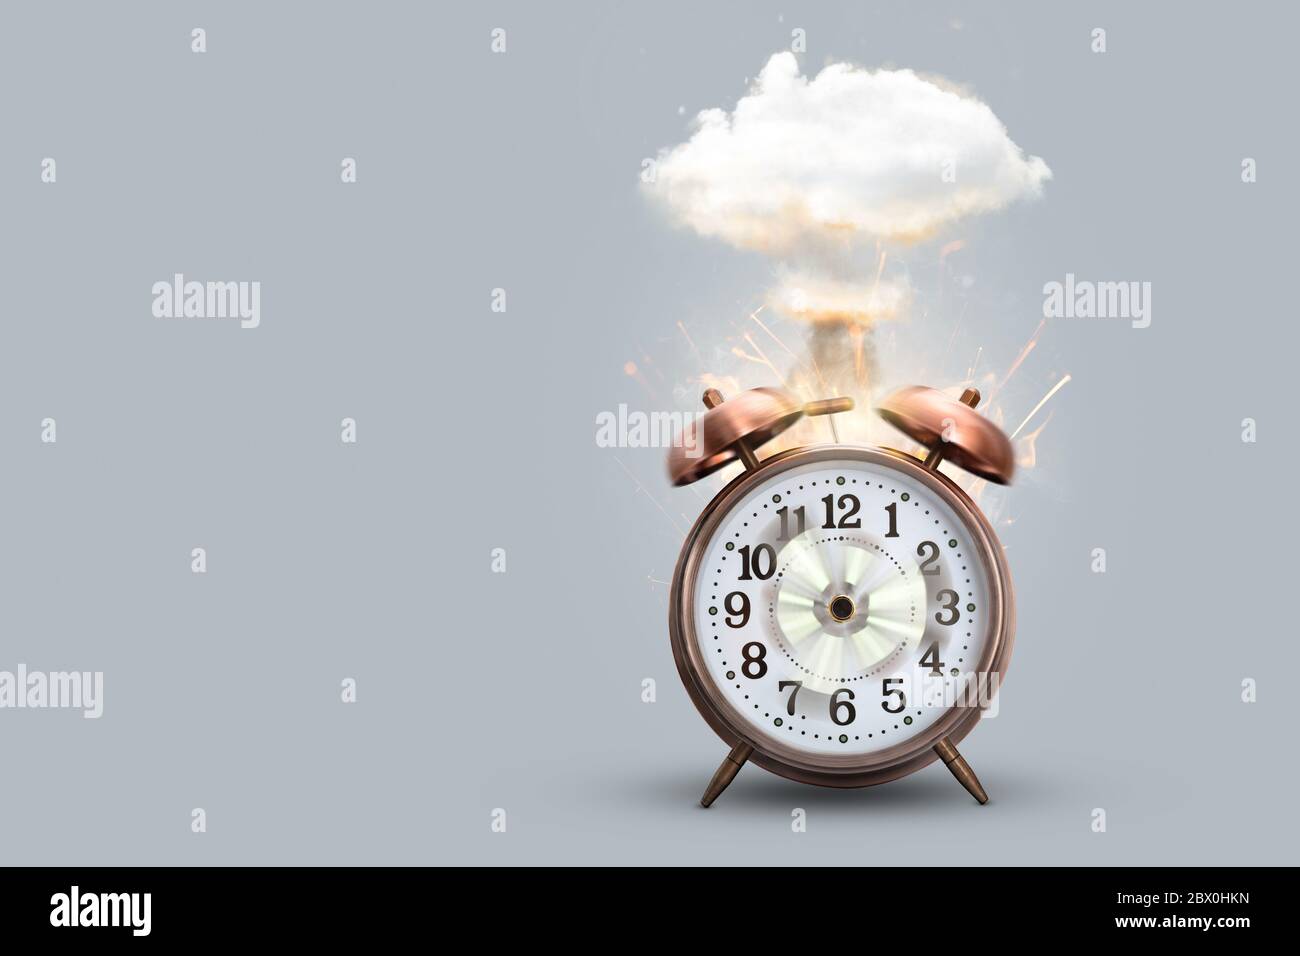 Explodierender Wecker - lustig out of time Konzept Stockfotografie - Alamy